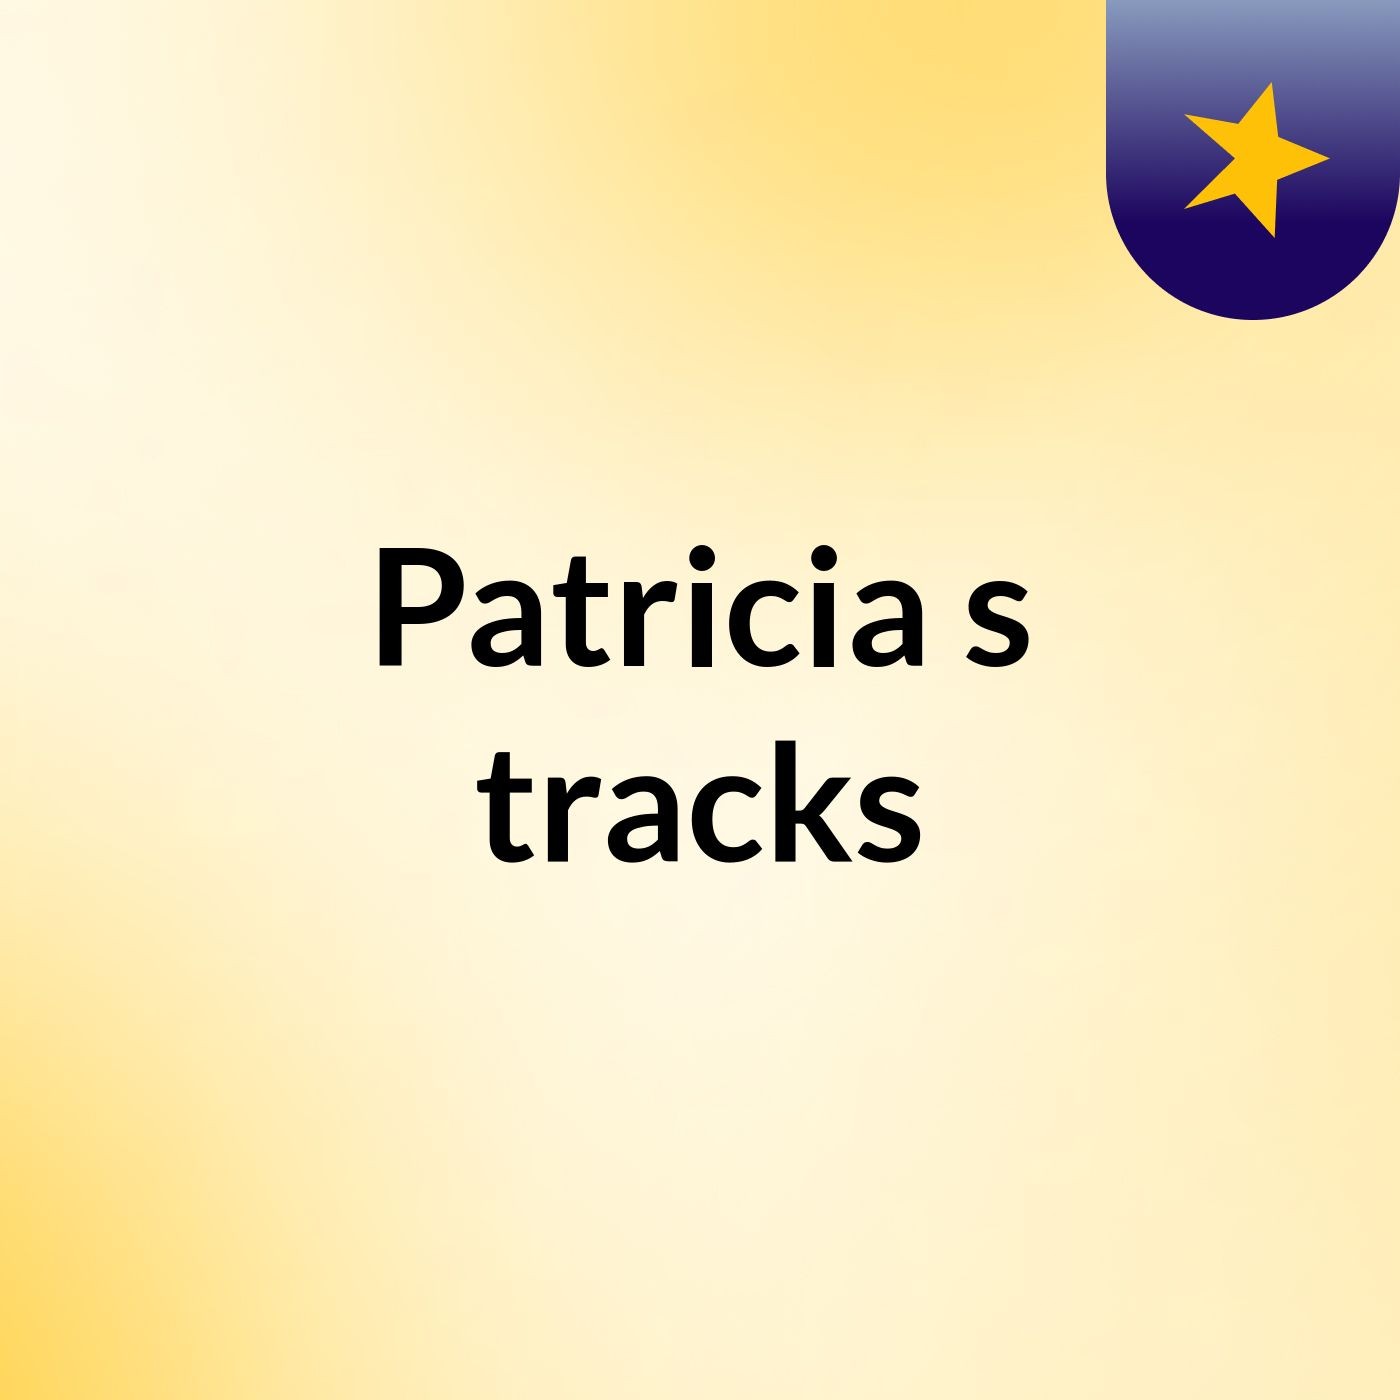 Patricia's tracks